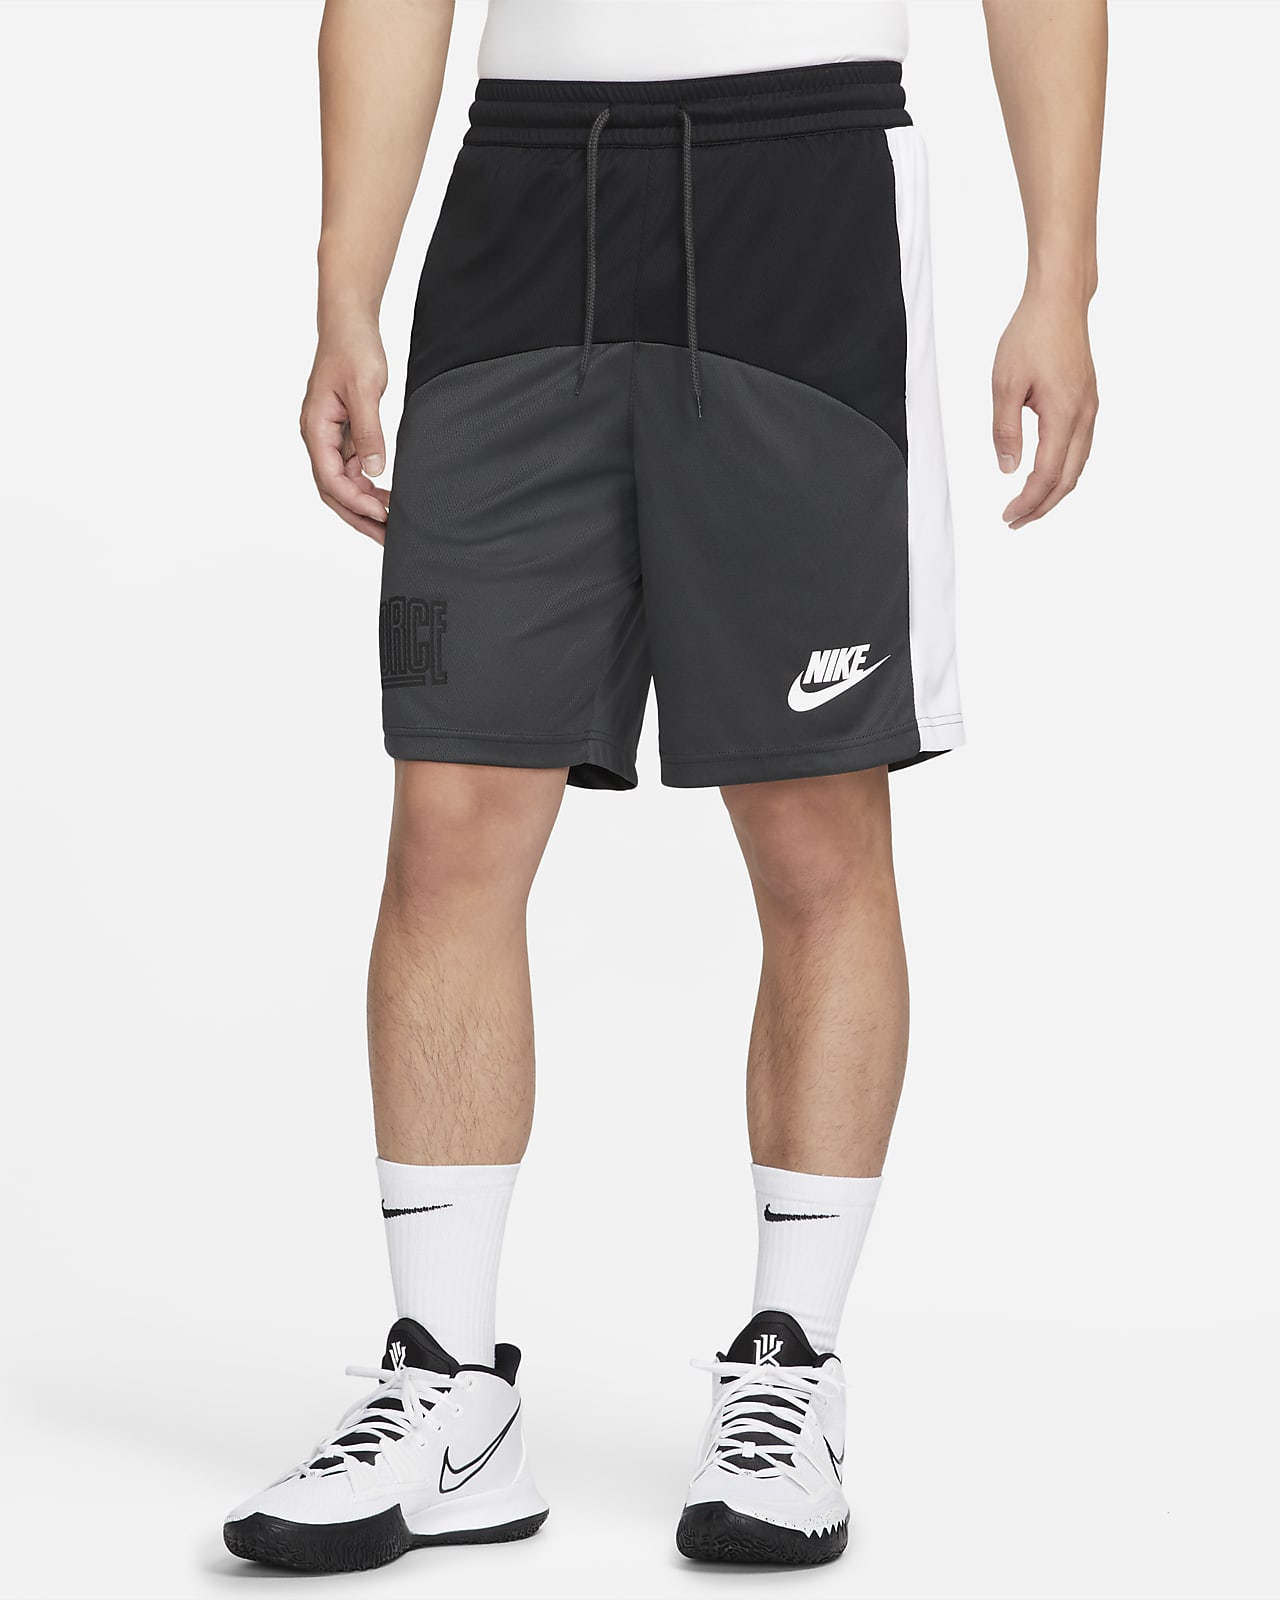 Nike Dri-FIT Starting 5 男子速干篮球短裤